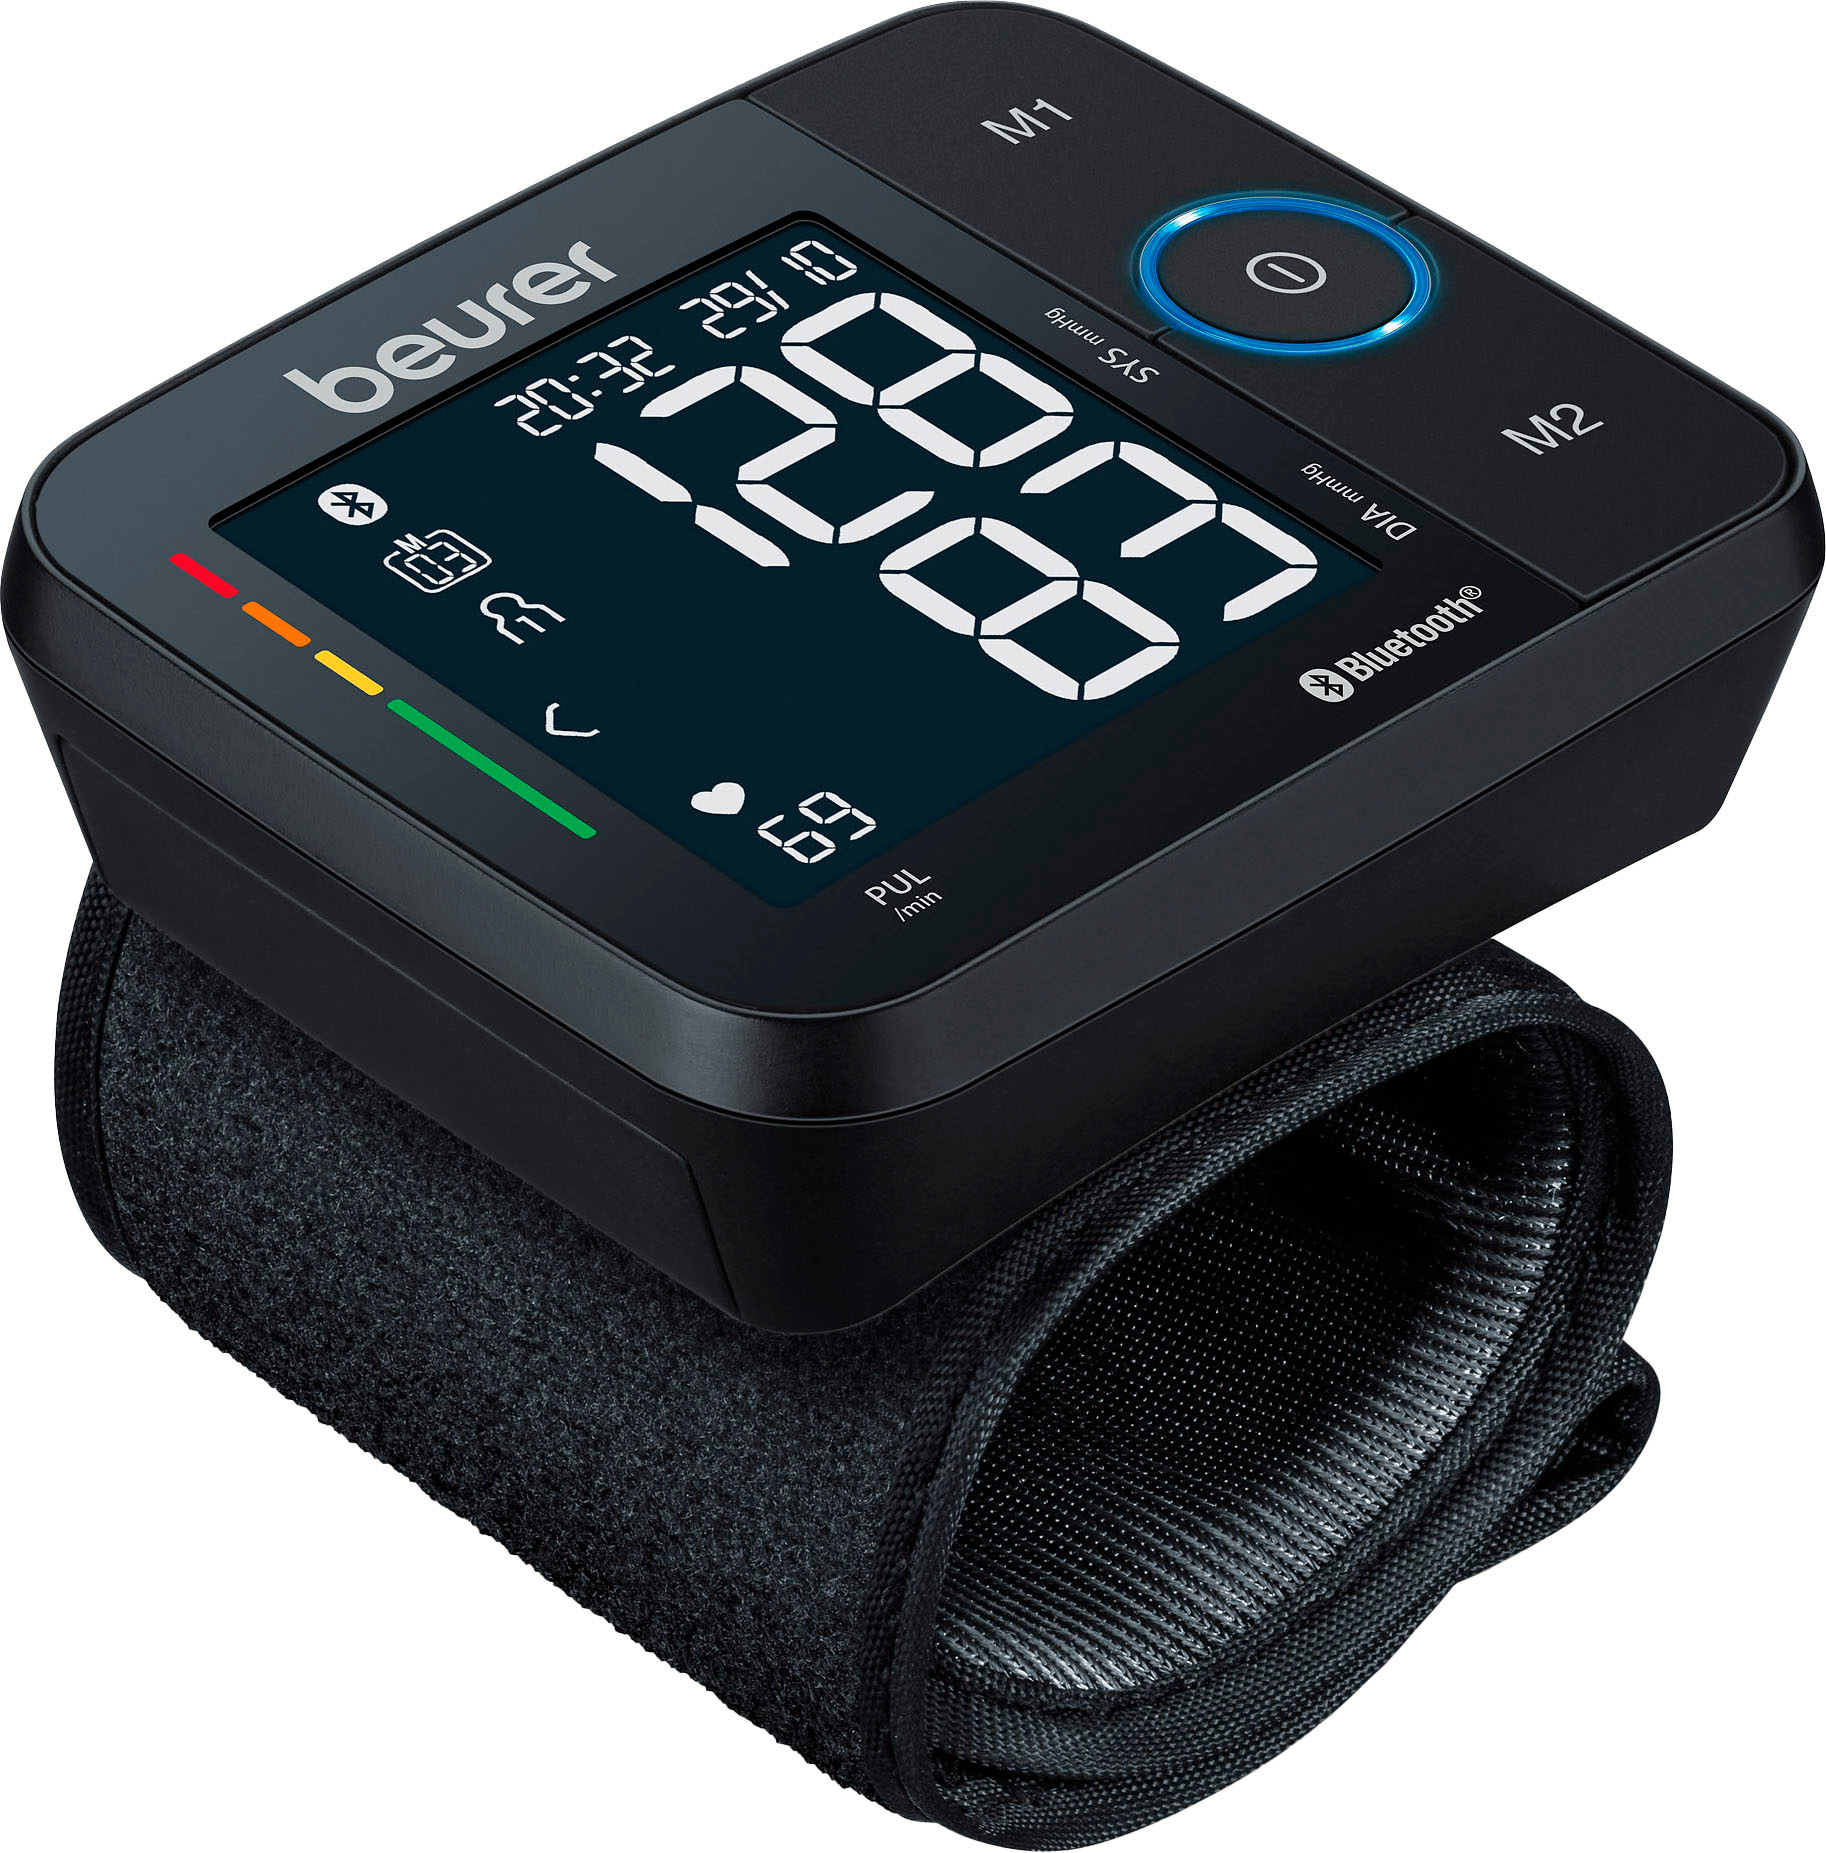 Best Buy: Beurer Bluetooth Wrist Blood Pressure Monitor Black BC54